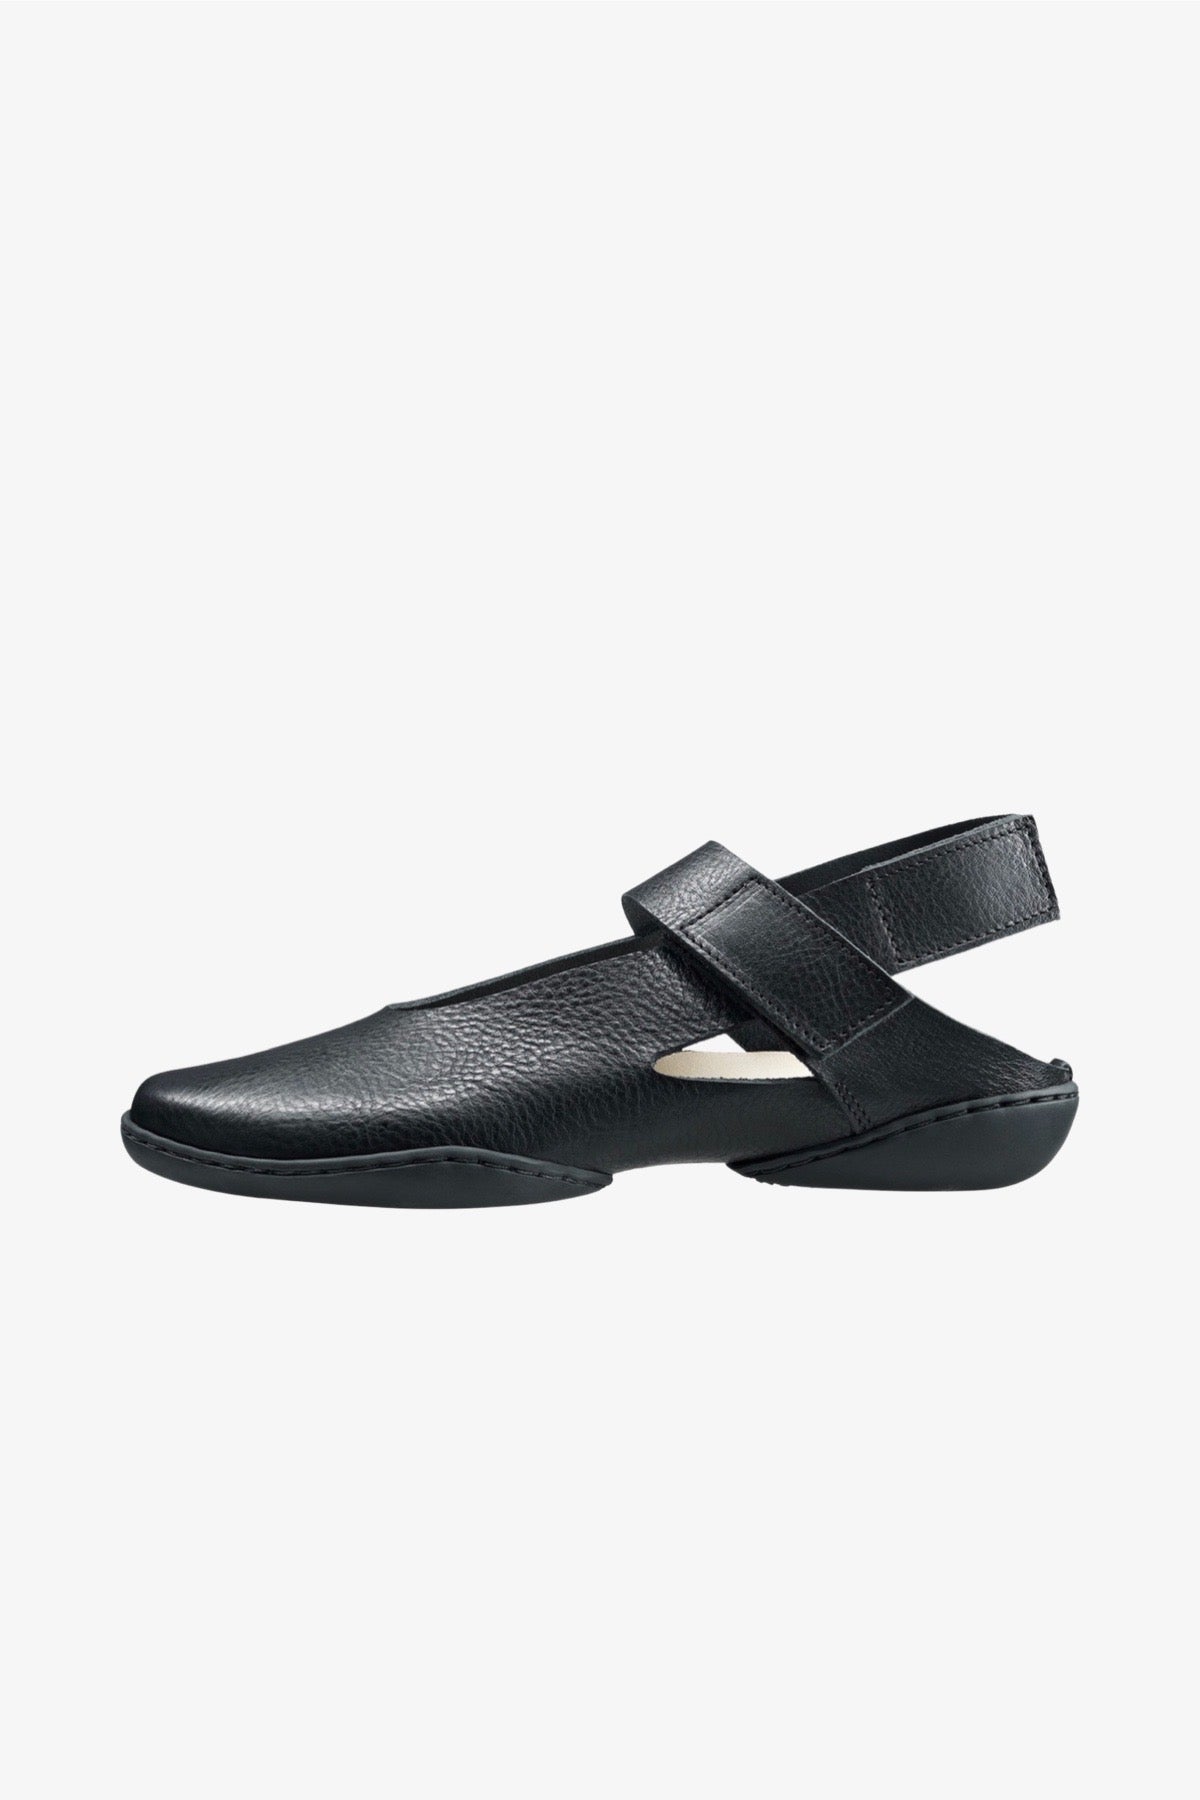 Trippen Junction Shoe | Black